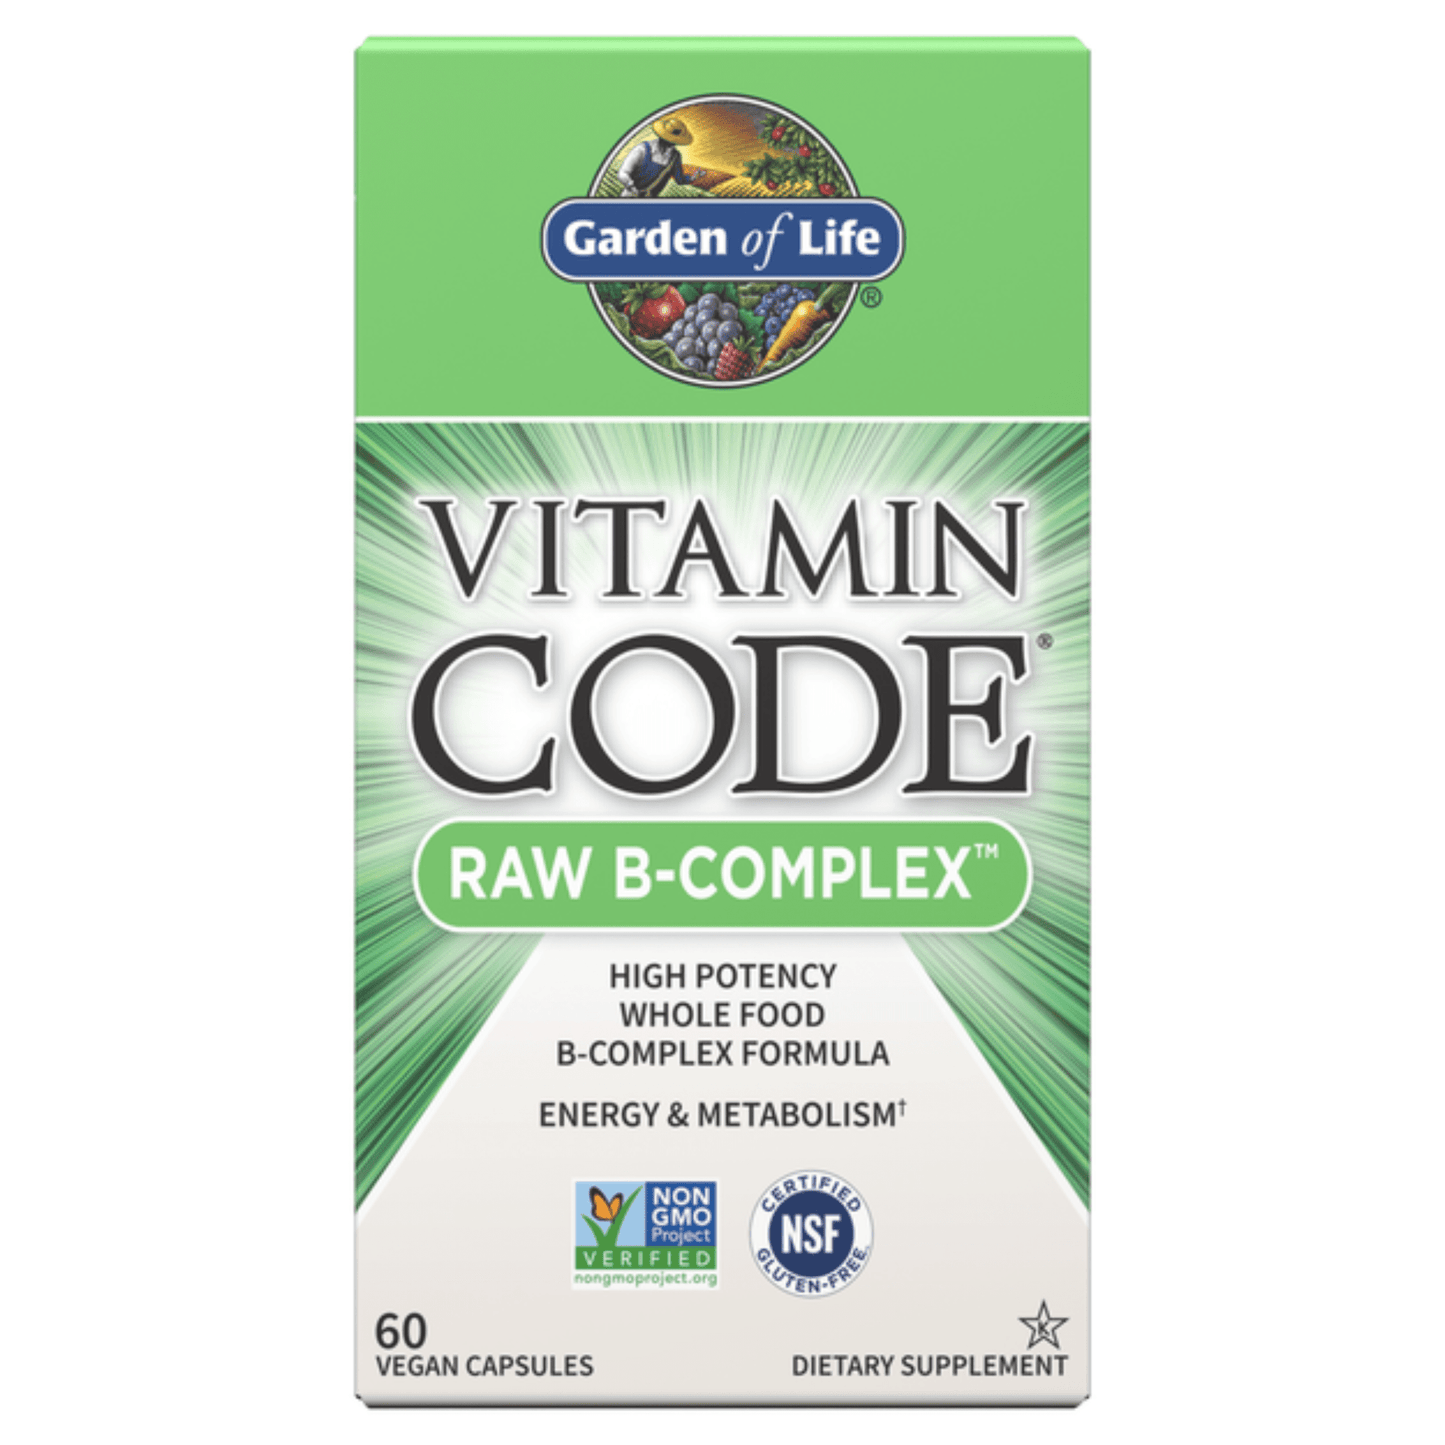 Primary Image of Raw B-Complex Vitamin Code